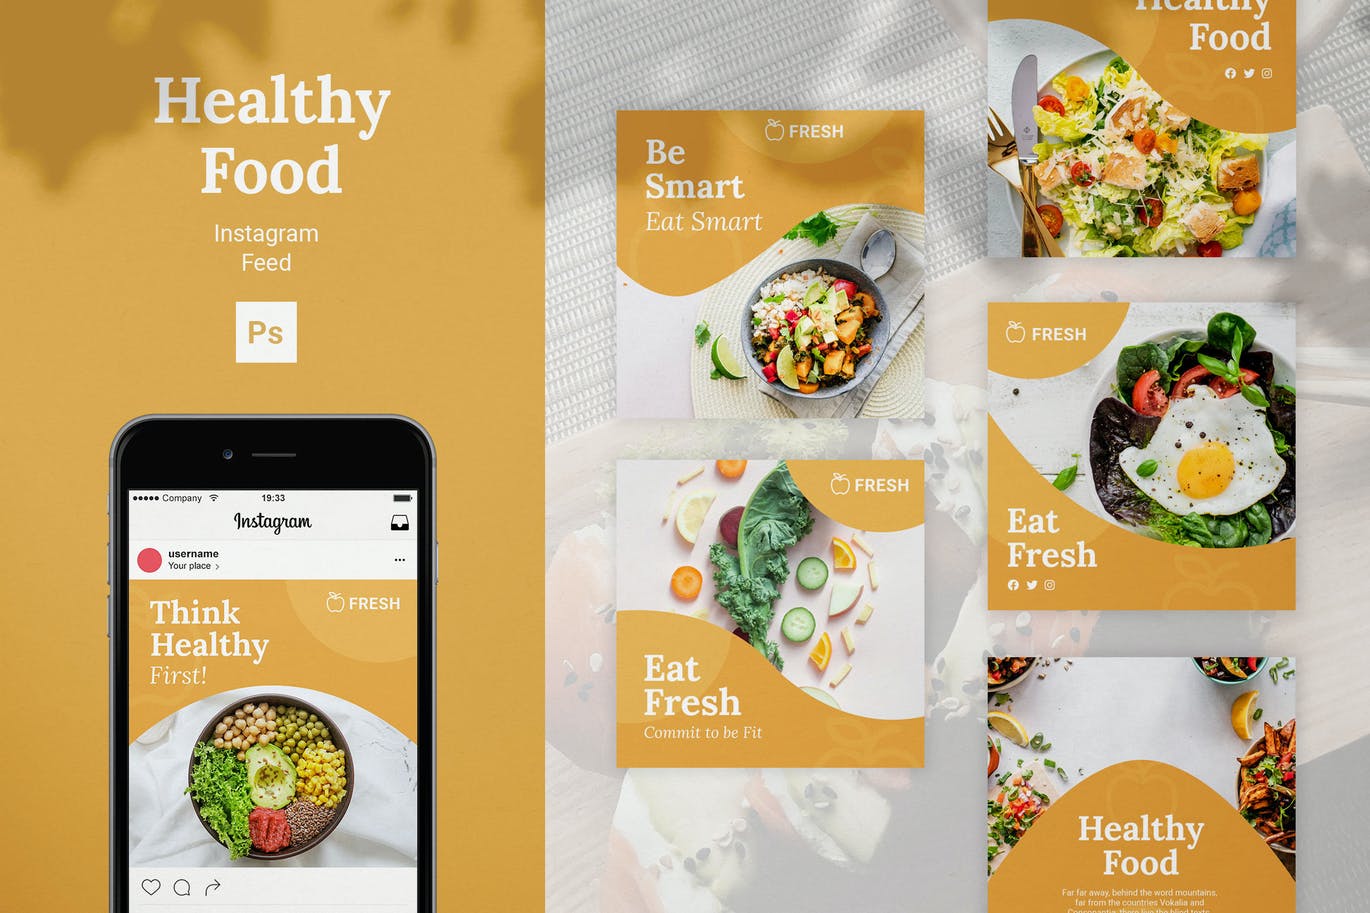 Healthy Food Instagram Feed